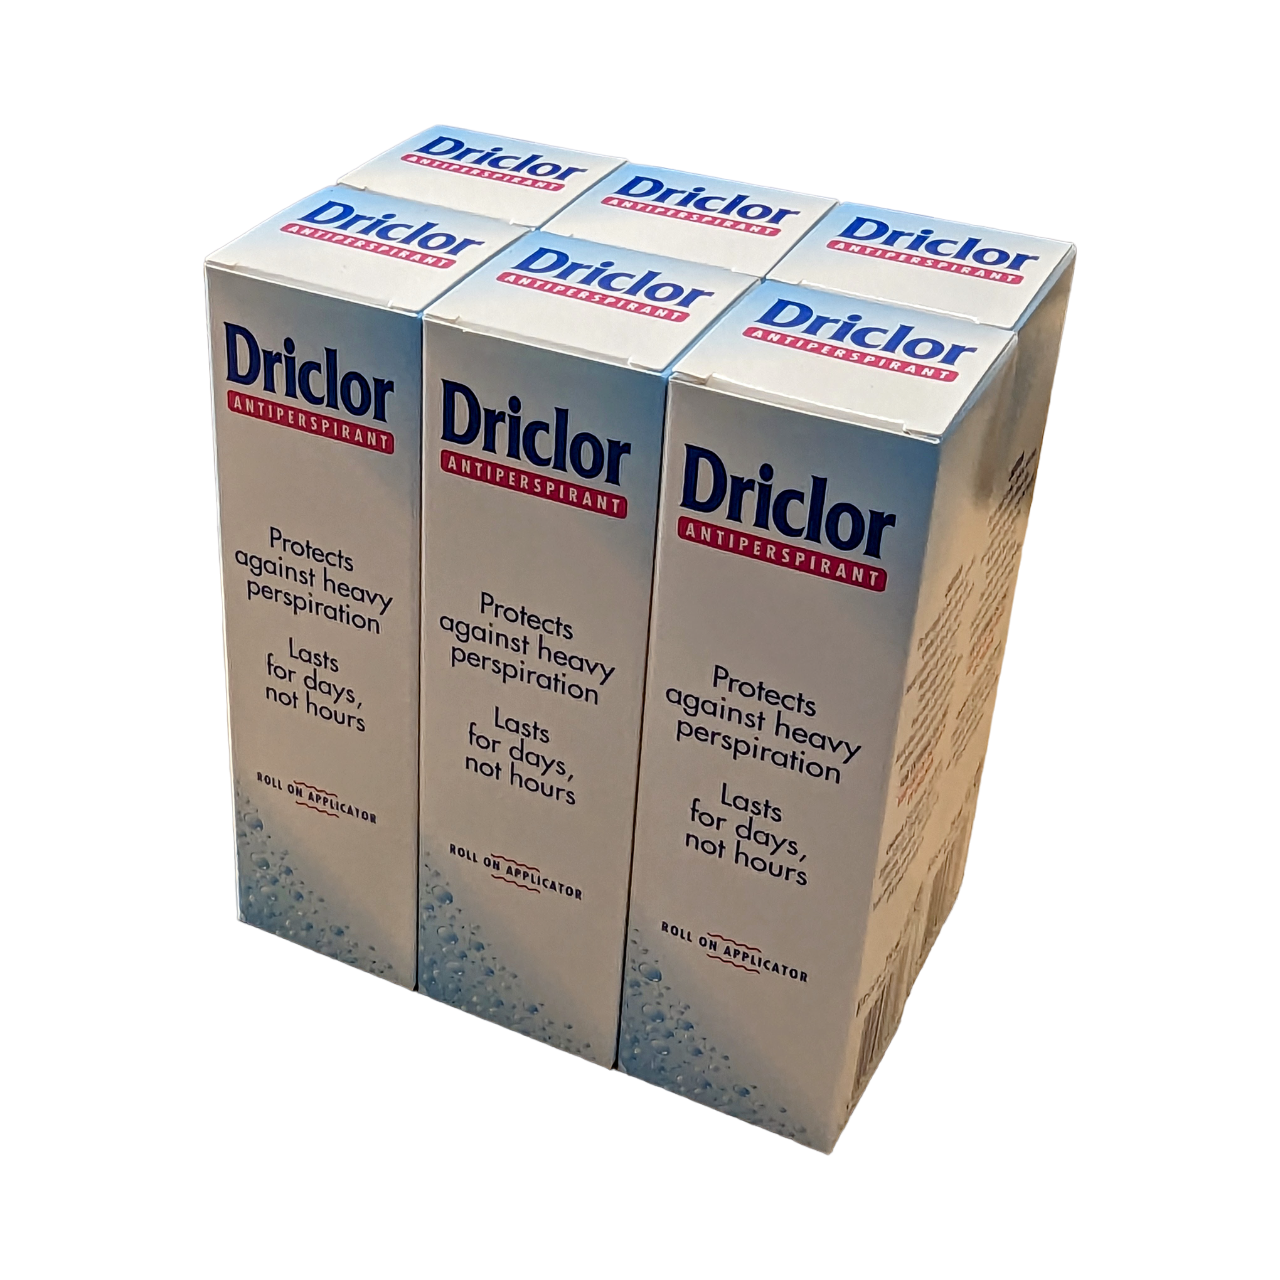 Driclor Roll On Applicator Antiperspirant 75ml - pack of 6